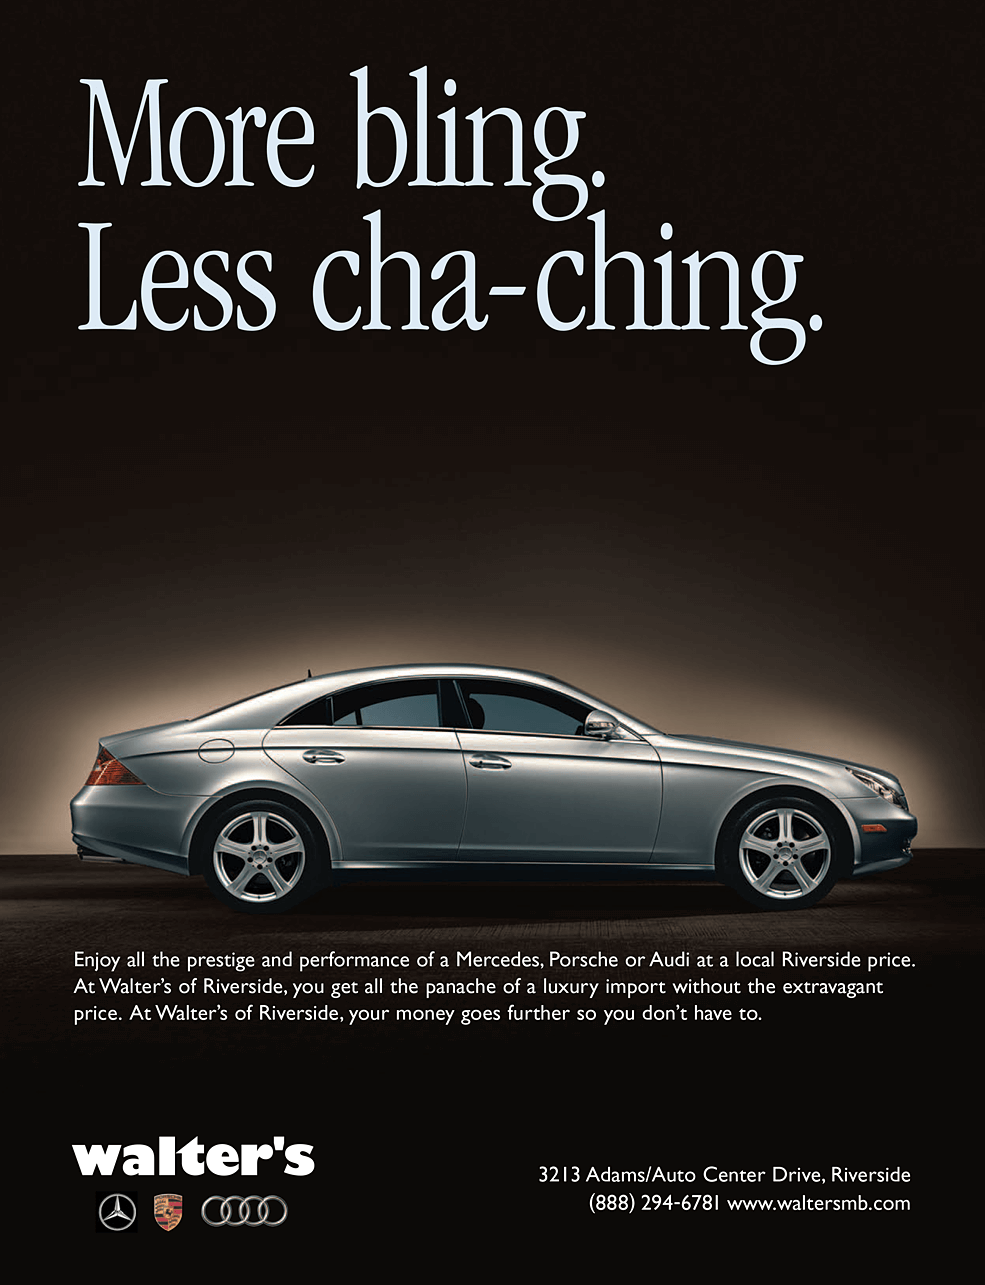 Walter's More Bling Less Cha-Ching Print Ad